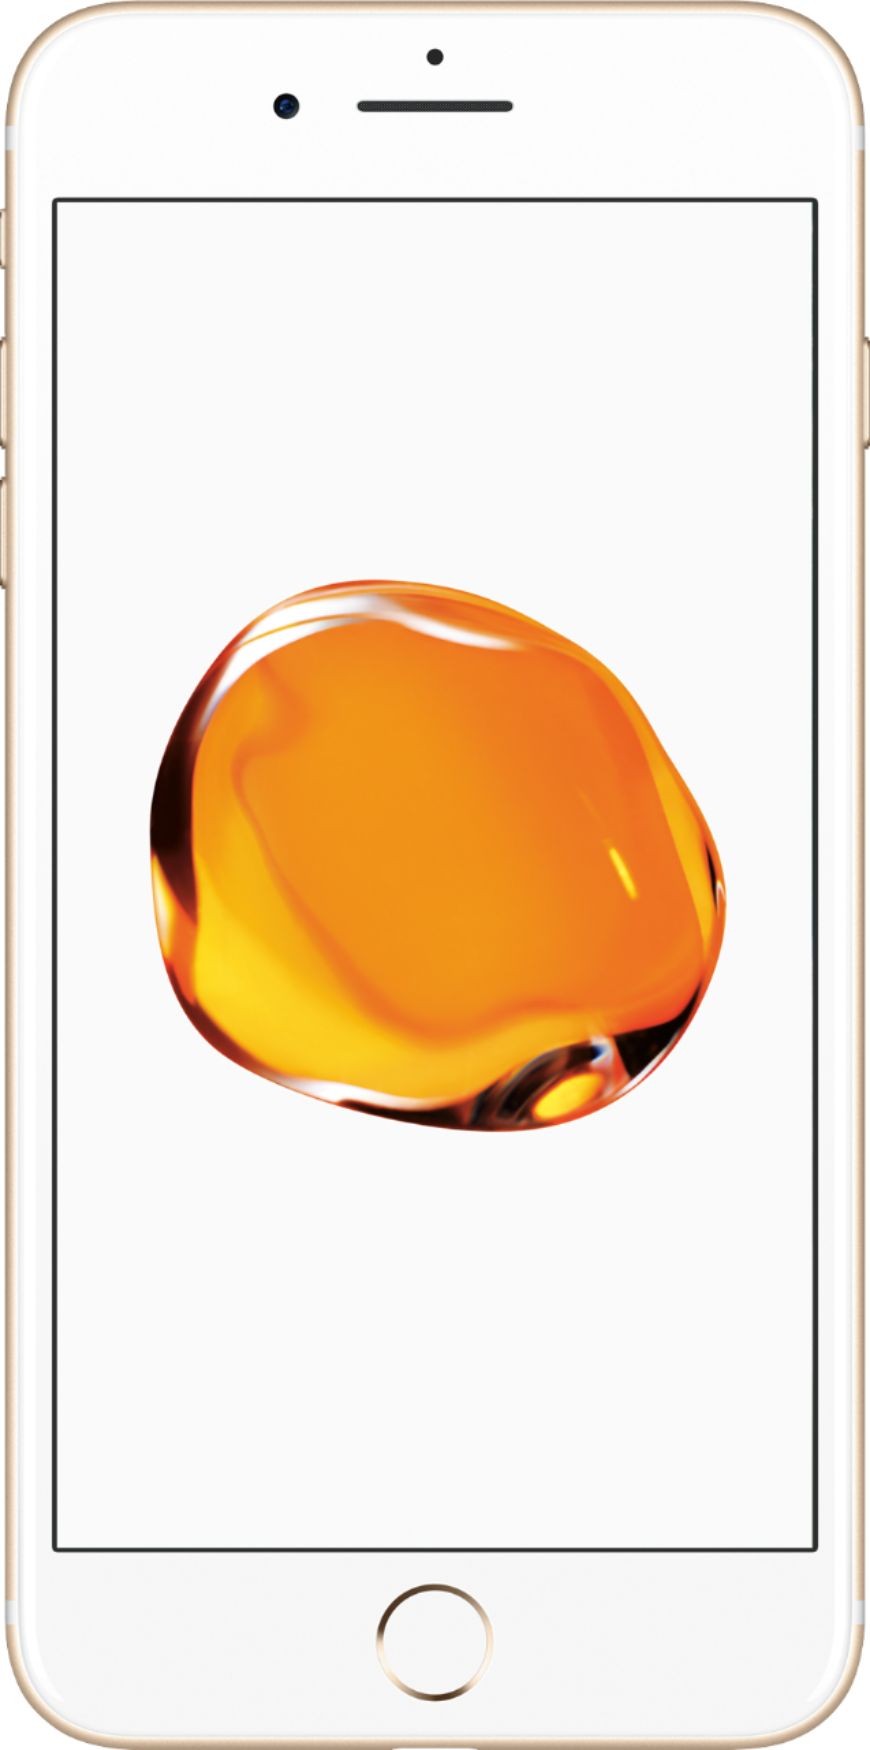 Apple iPhone 7 Plus 32GB Rose Gold (Verizon) MNQL2LL/A - Best Buy